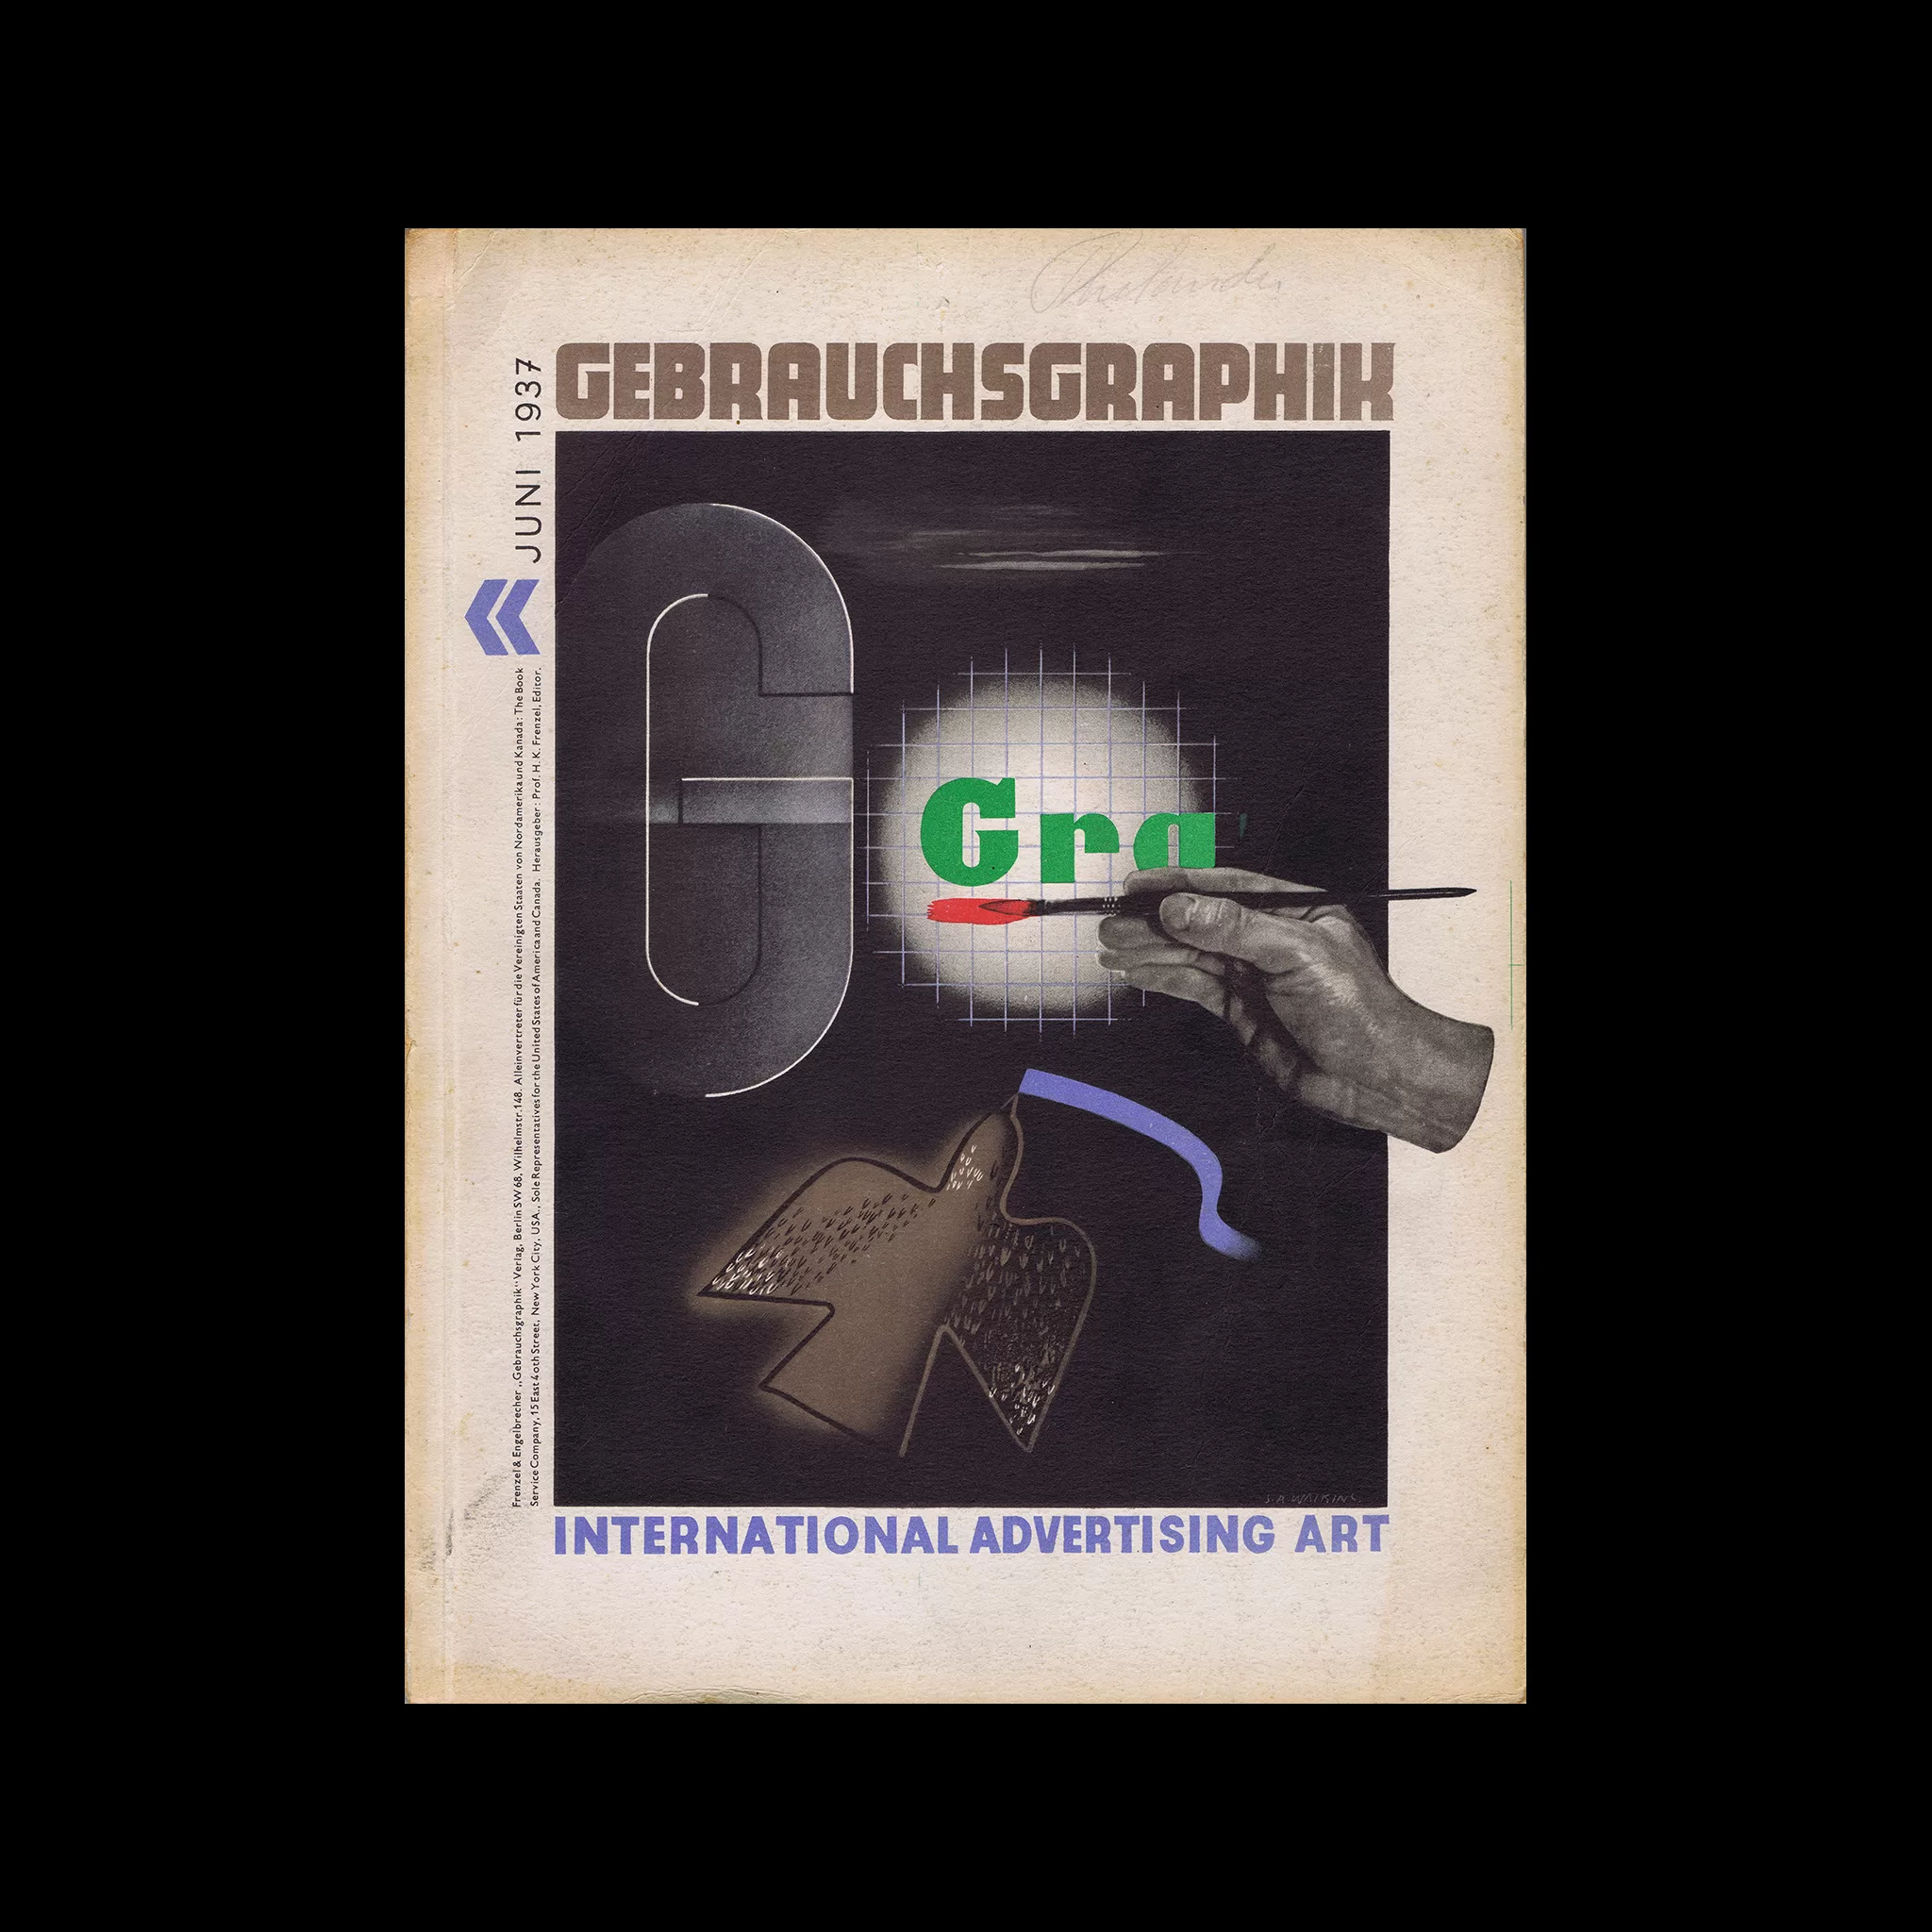 Gebrauchsgraphik, 06, 1937. Cover design by G. A. Watkins